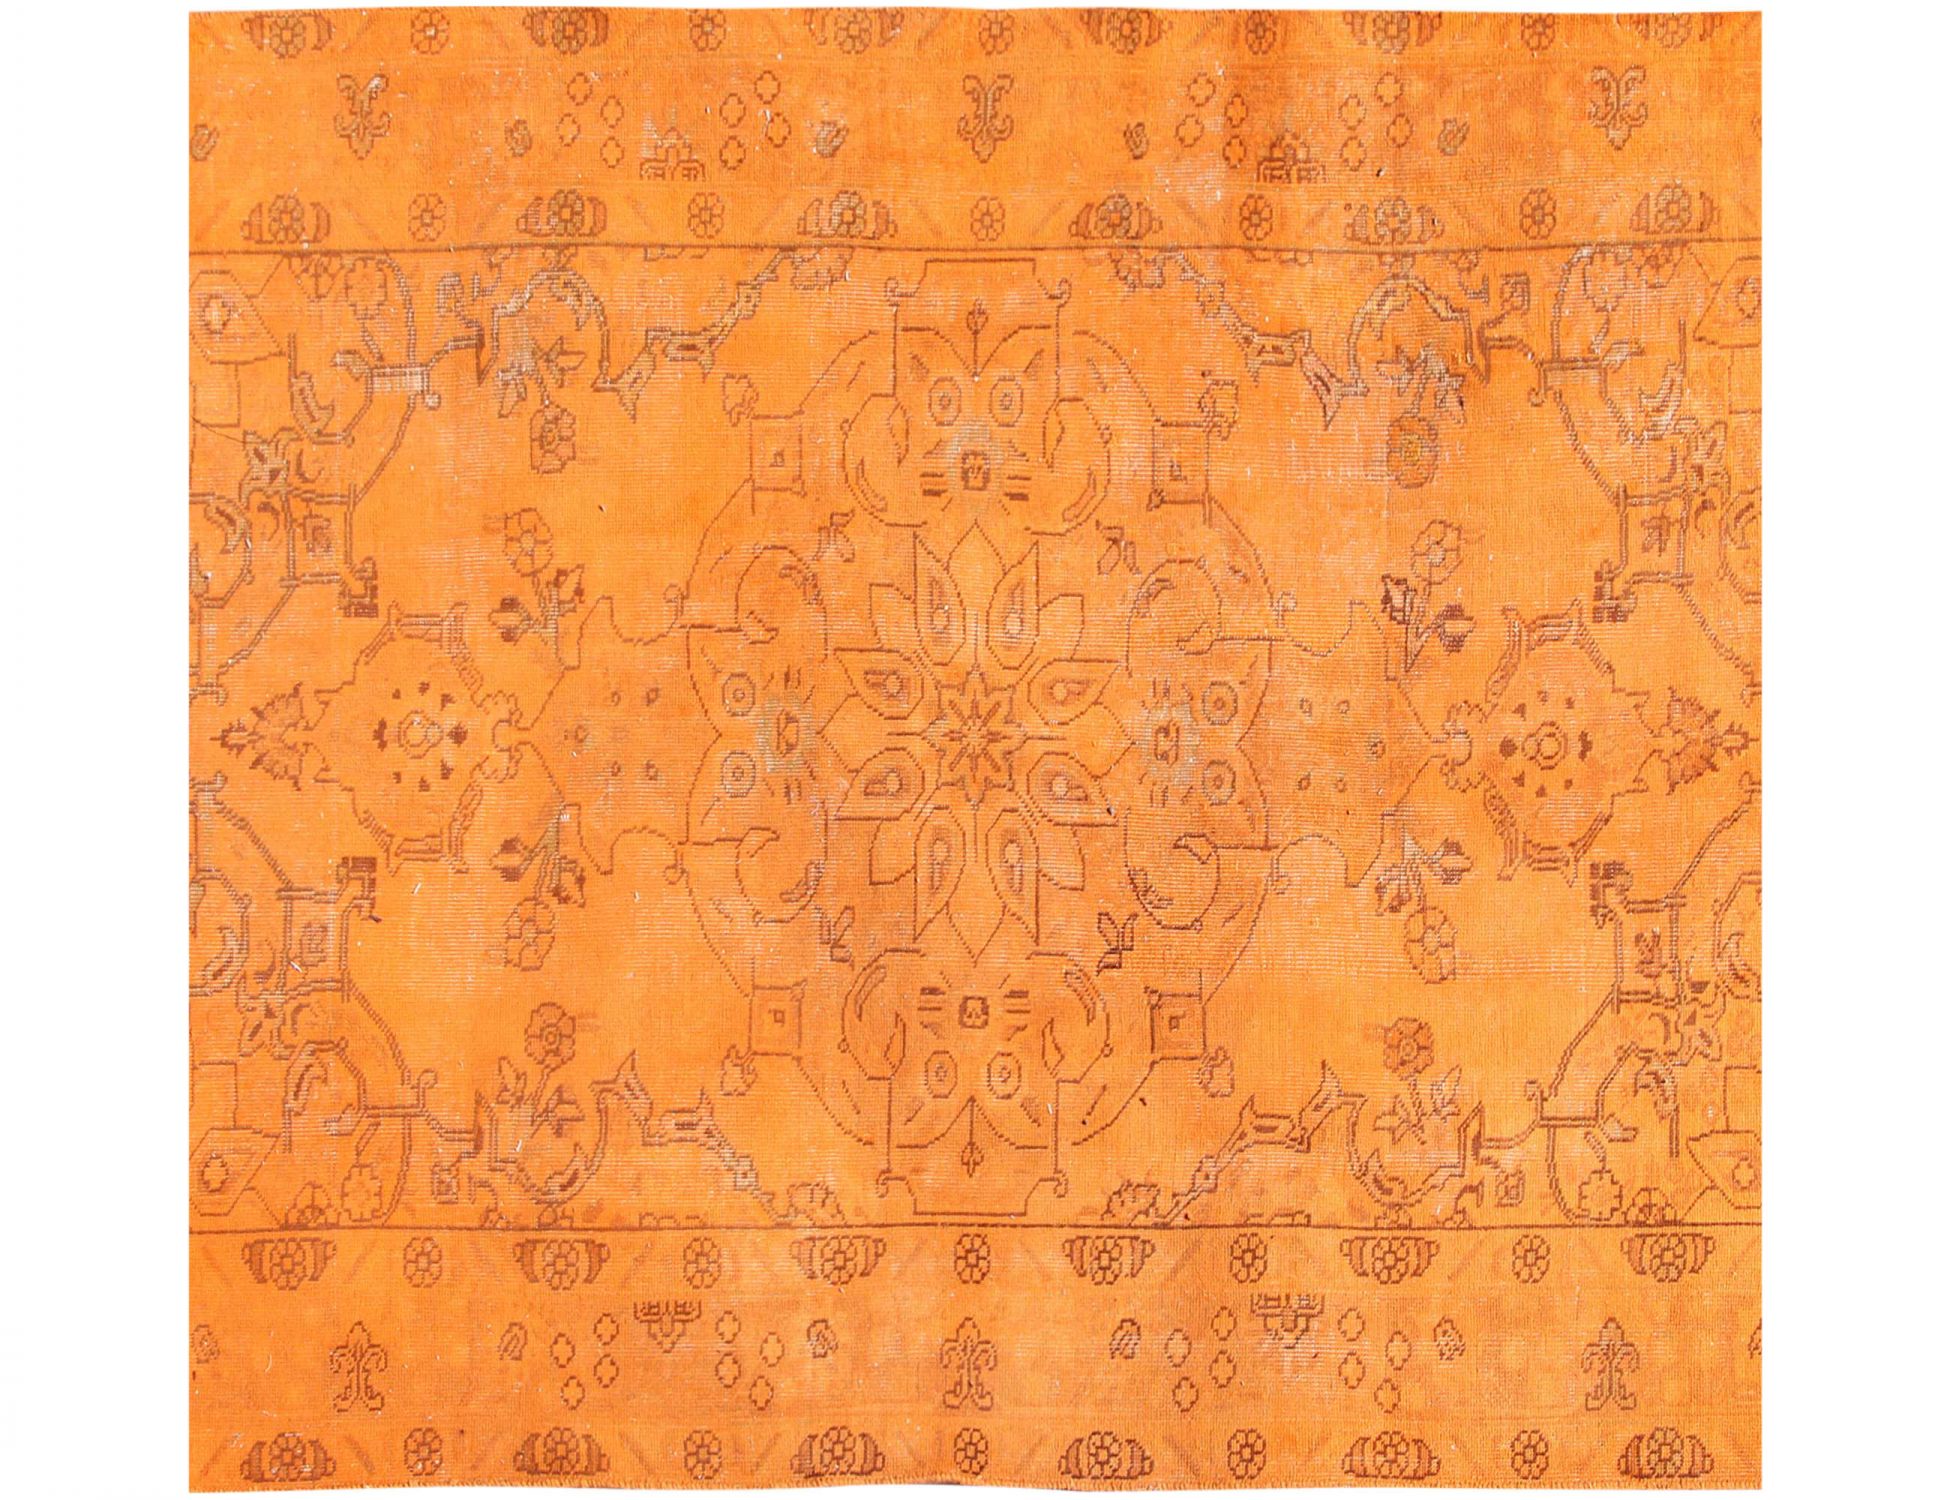 Quadrat  Vintage Teppich  orange <br/>180 x 180 cm